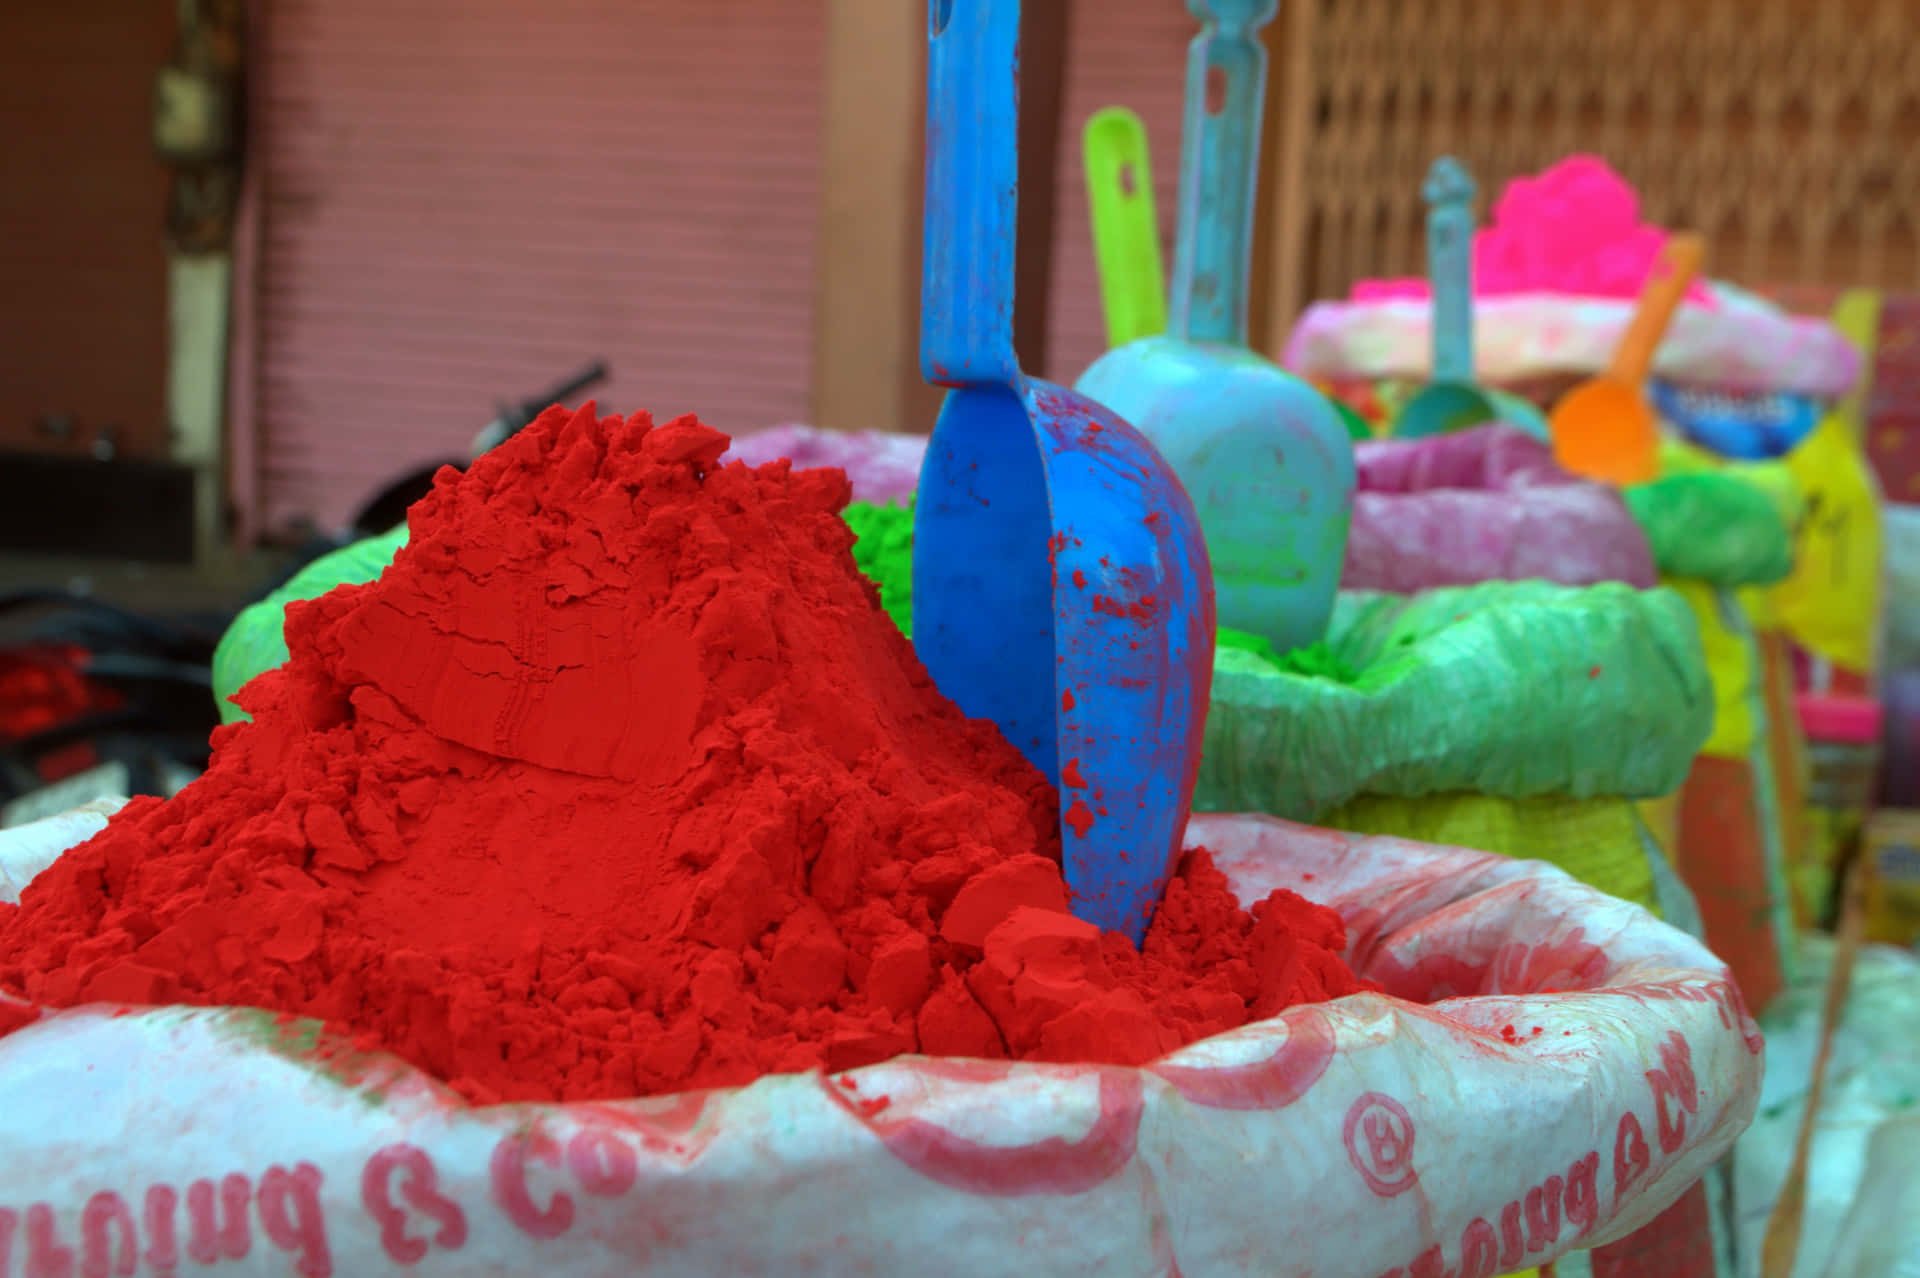 A Bag Of Colored Powder